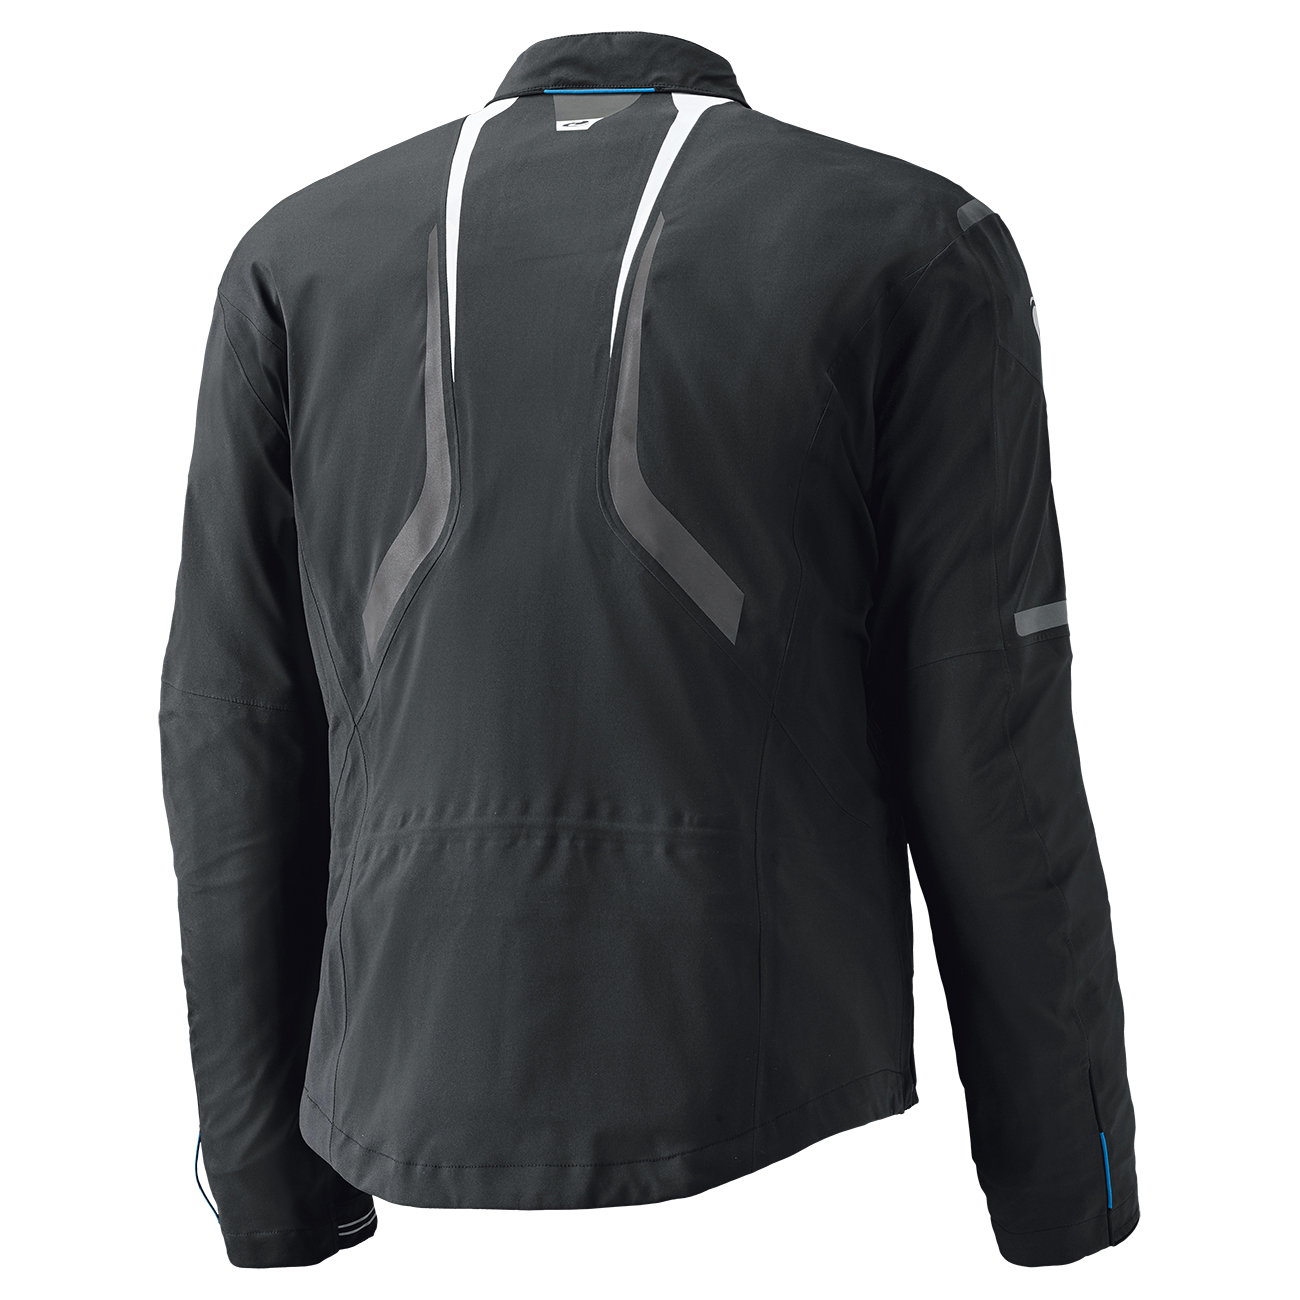 Clip-in GTX TOP GORE-TEX® Packlite jacket